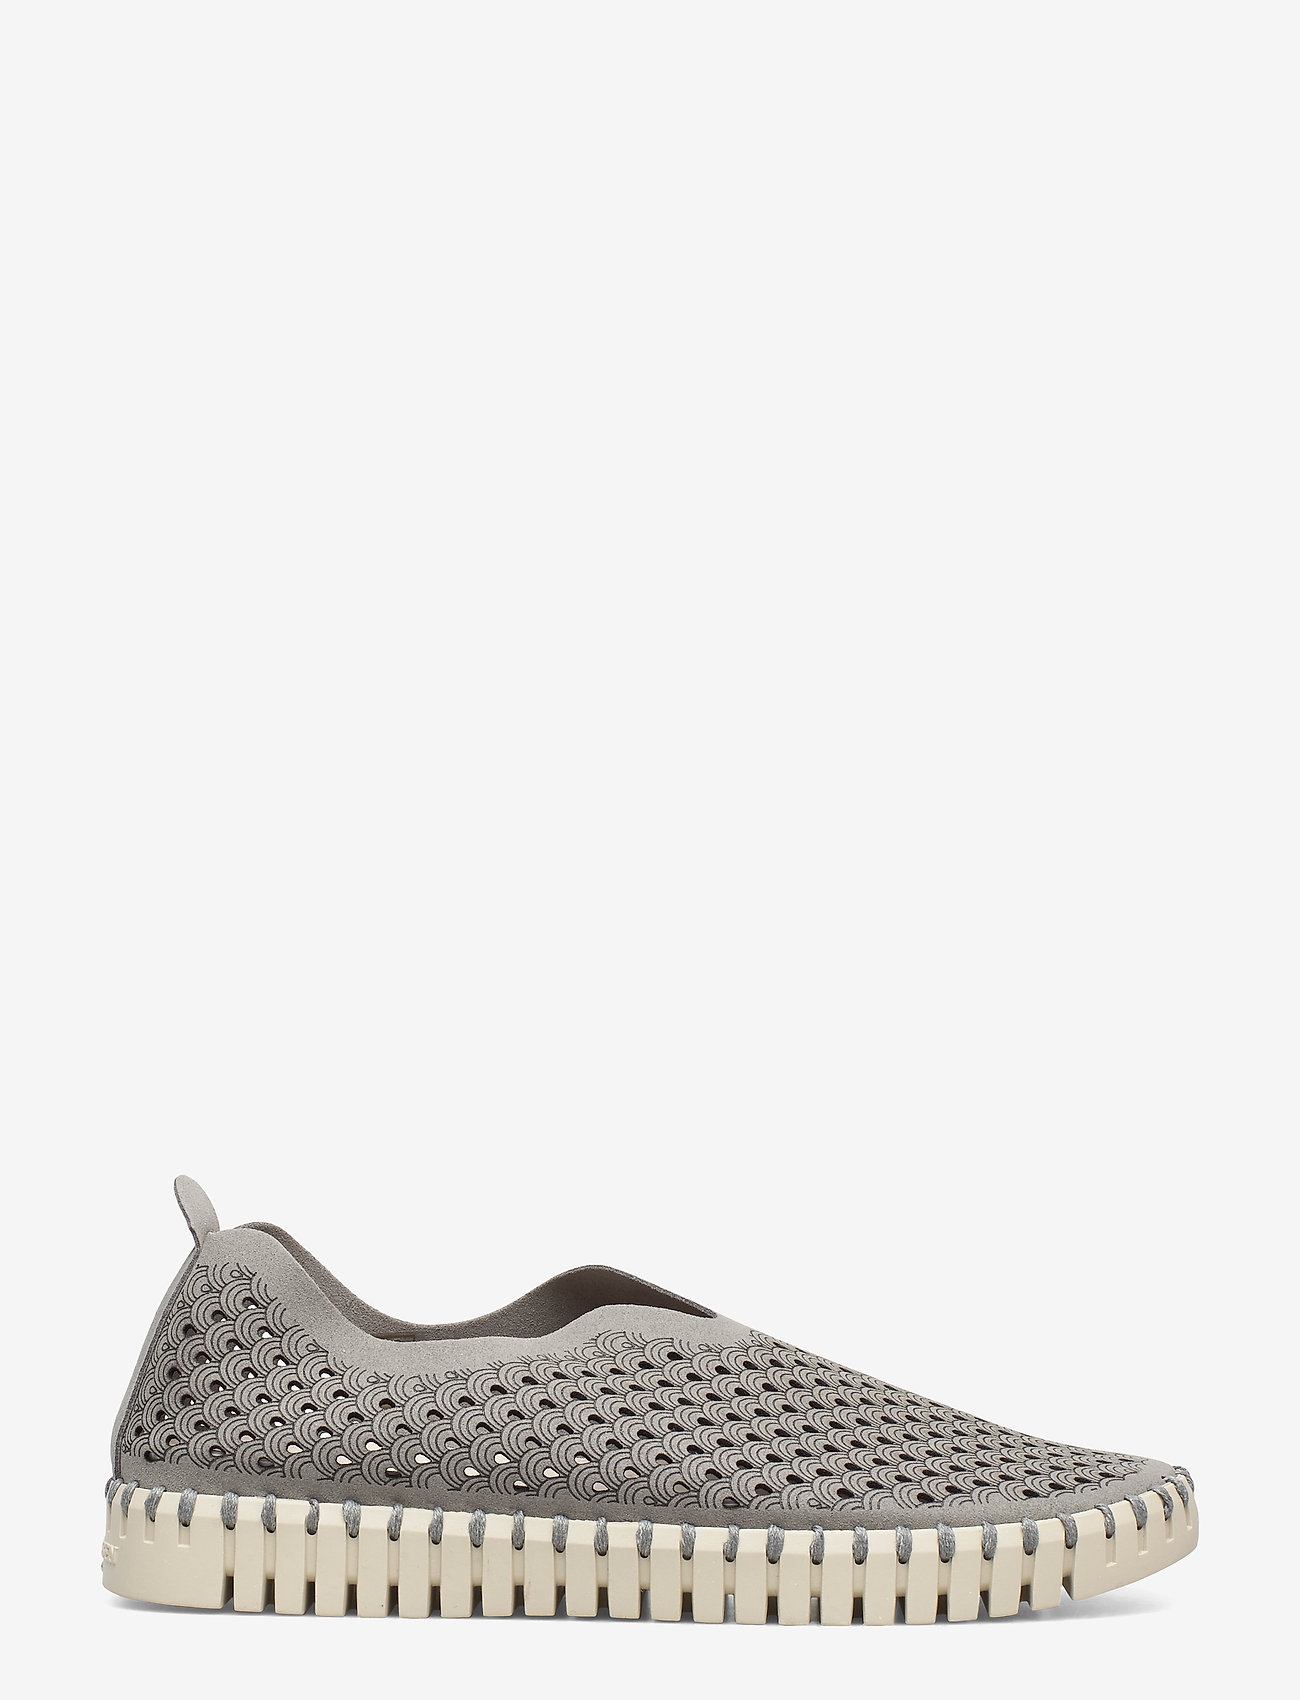 Ilse Jacobsen - Flats - slip-on sneakers - grey - 1